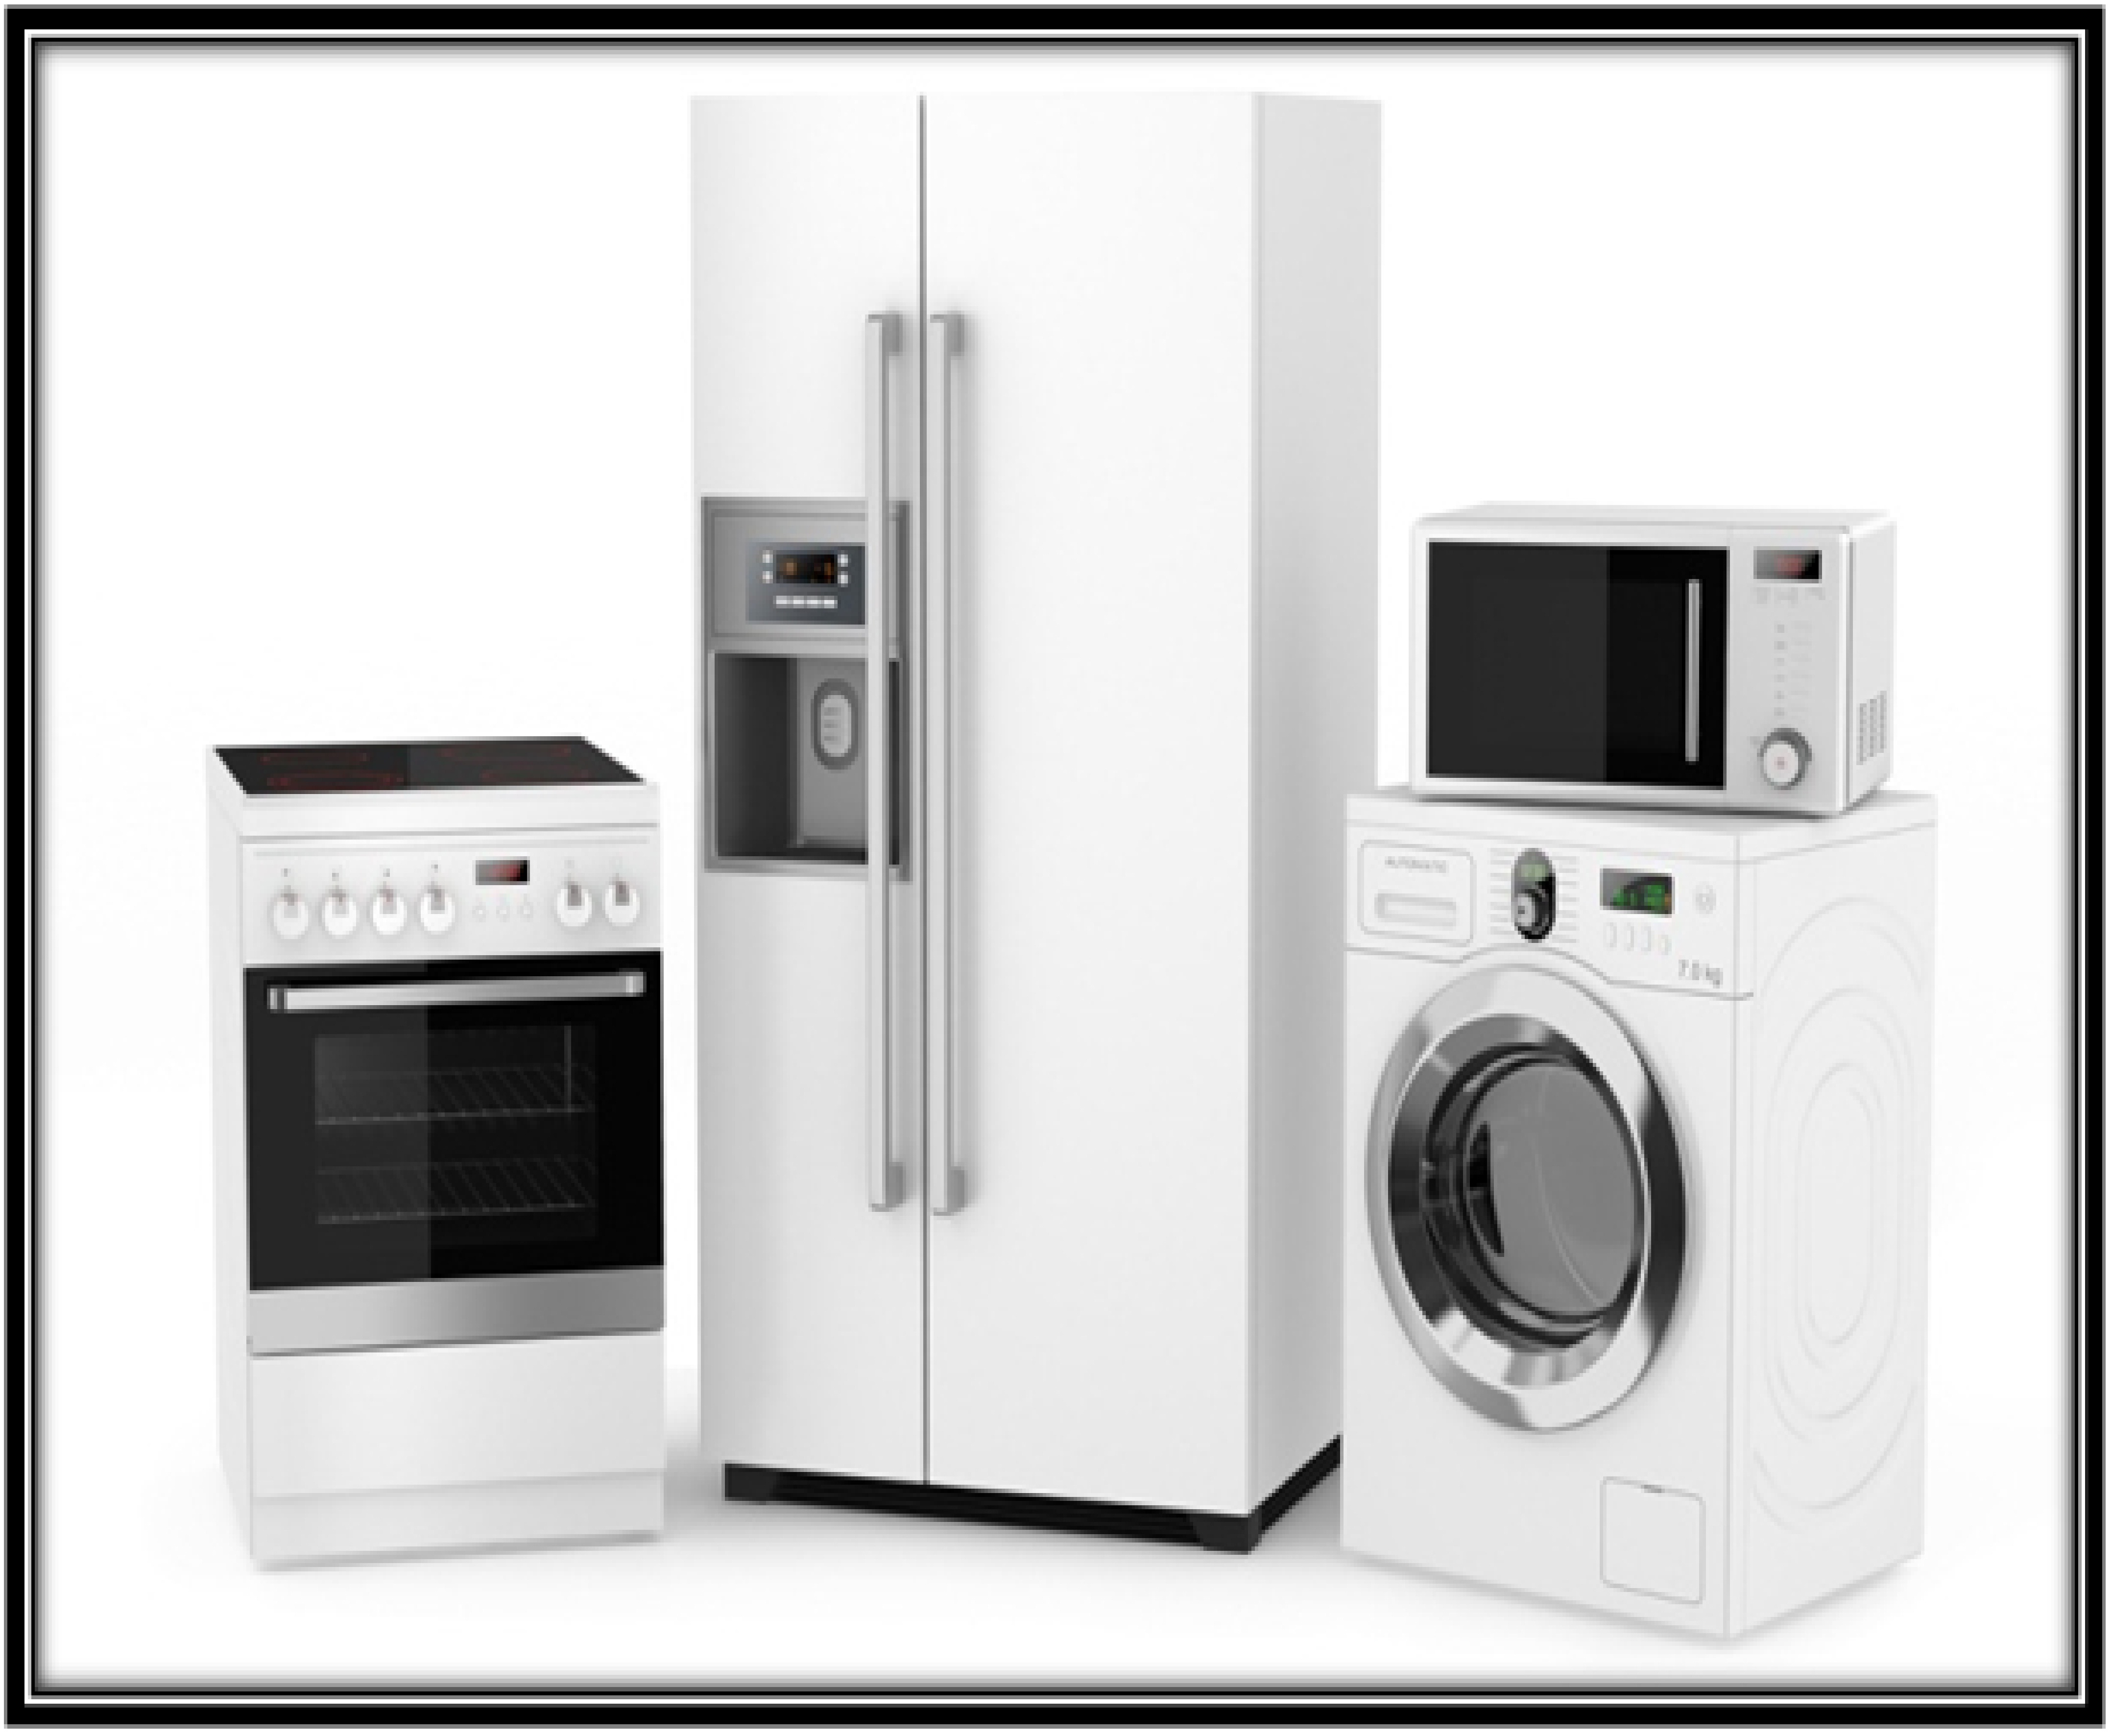 Home Appliances - Home Decor Ideas